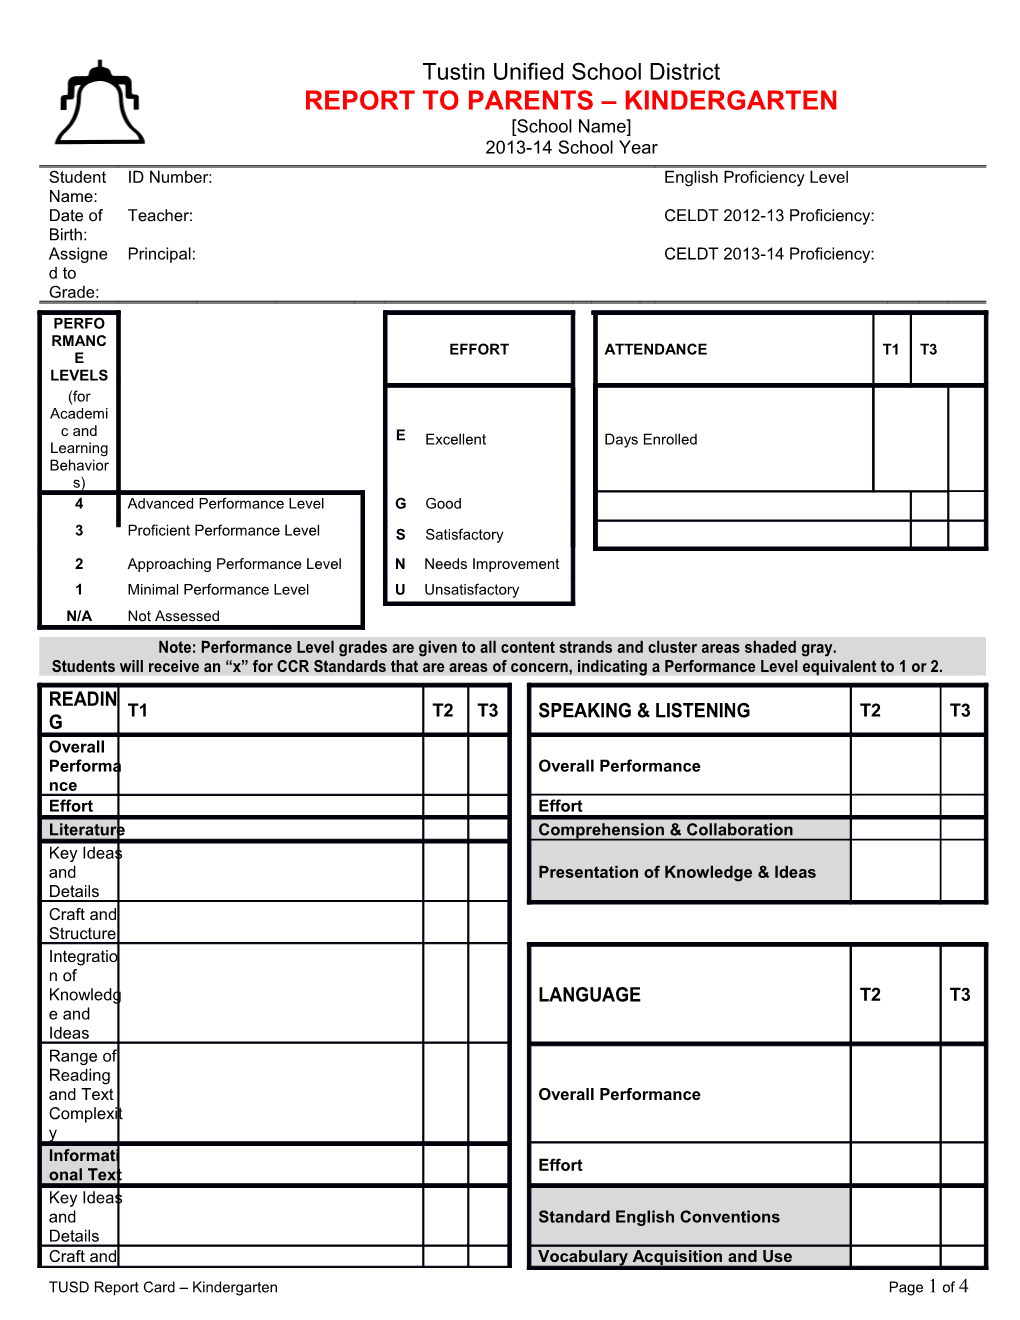 TUSD Report Card Kindergartenpage 1 of 2